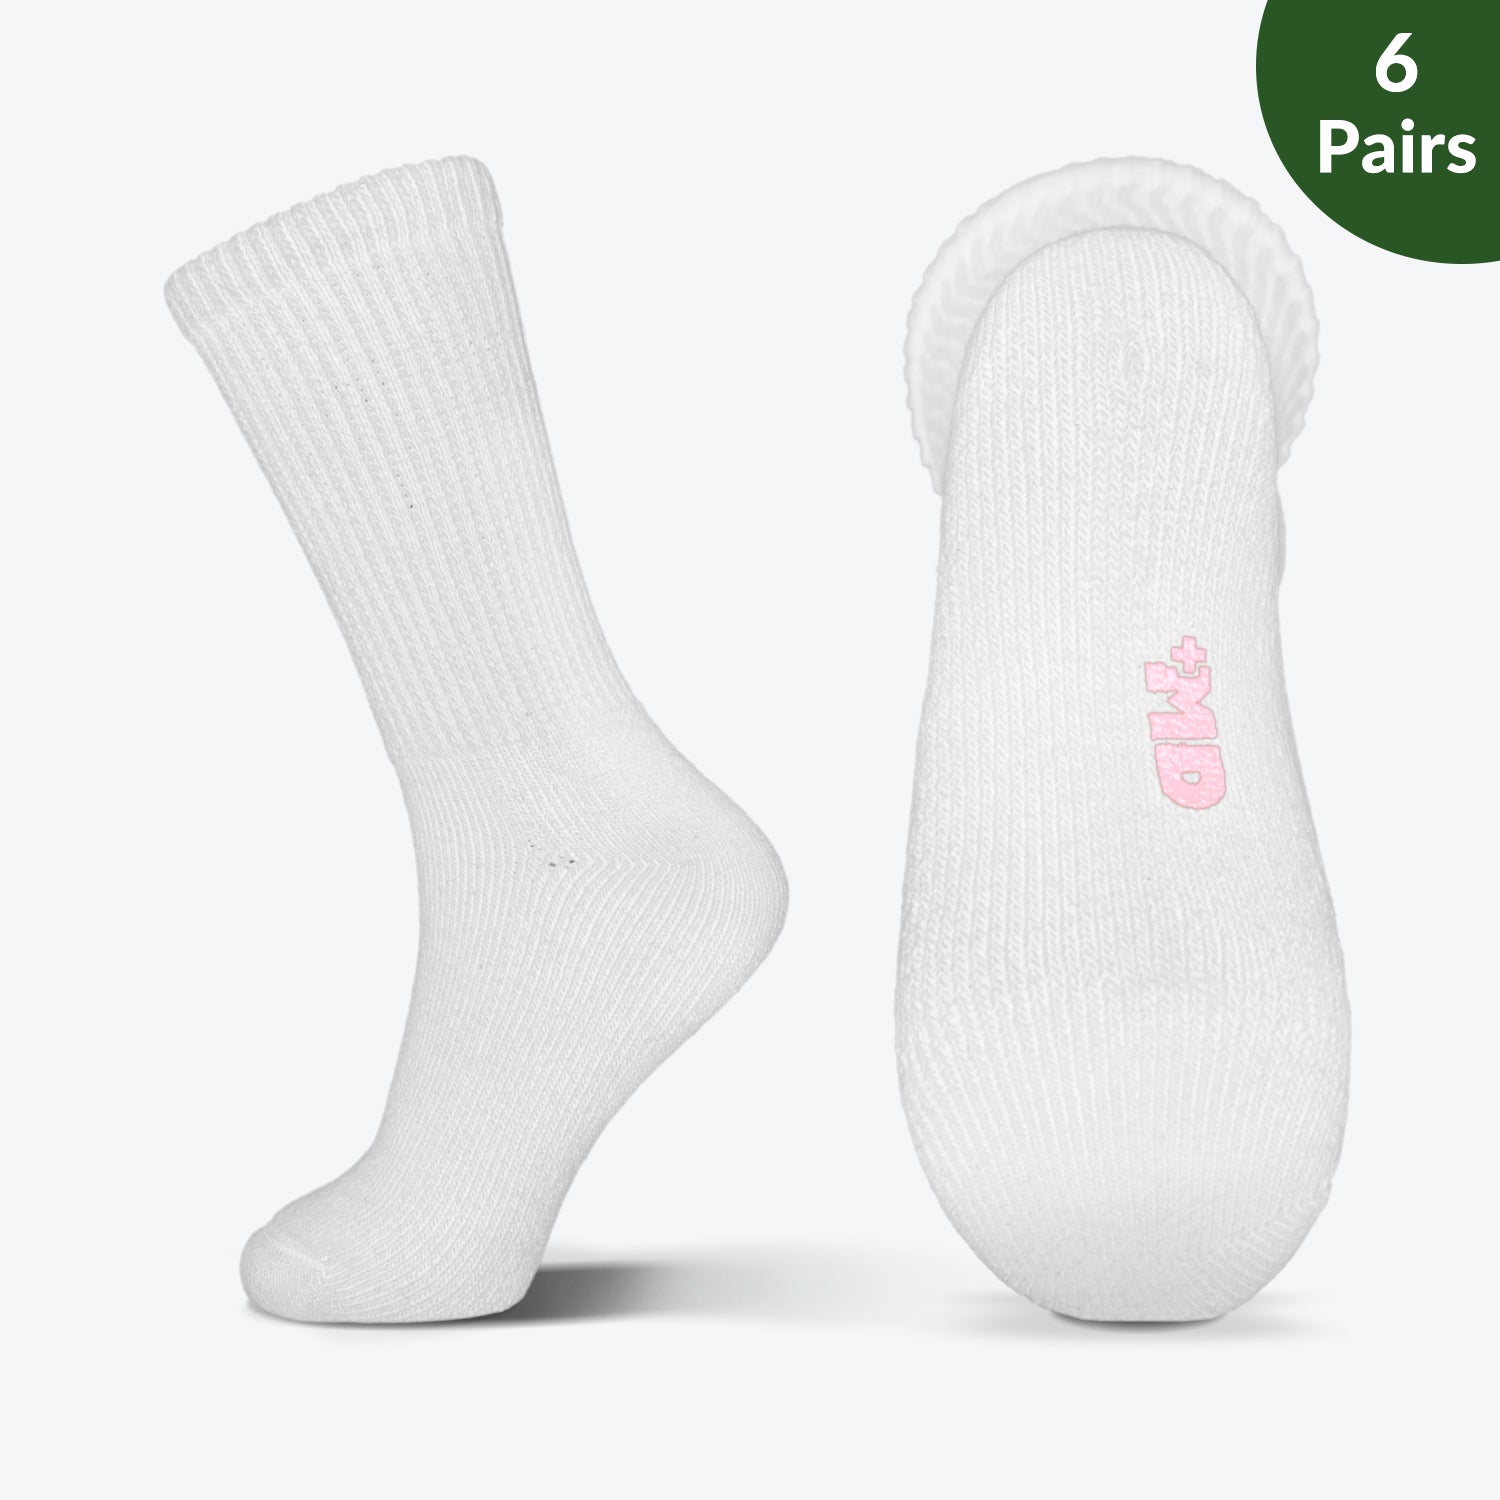 Anatomically designed, diabetic non-binding crew socks, 6 Pairs